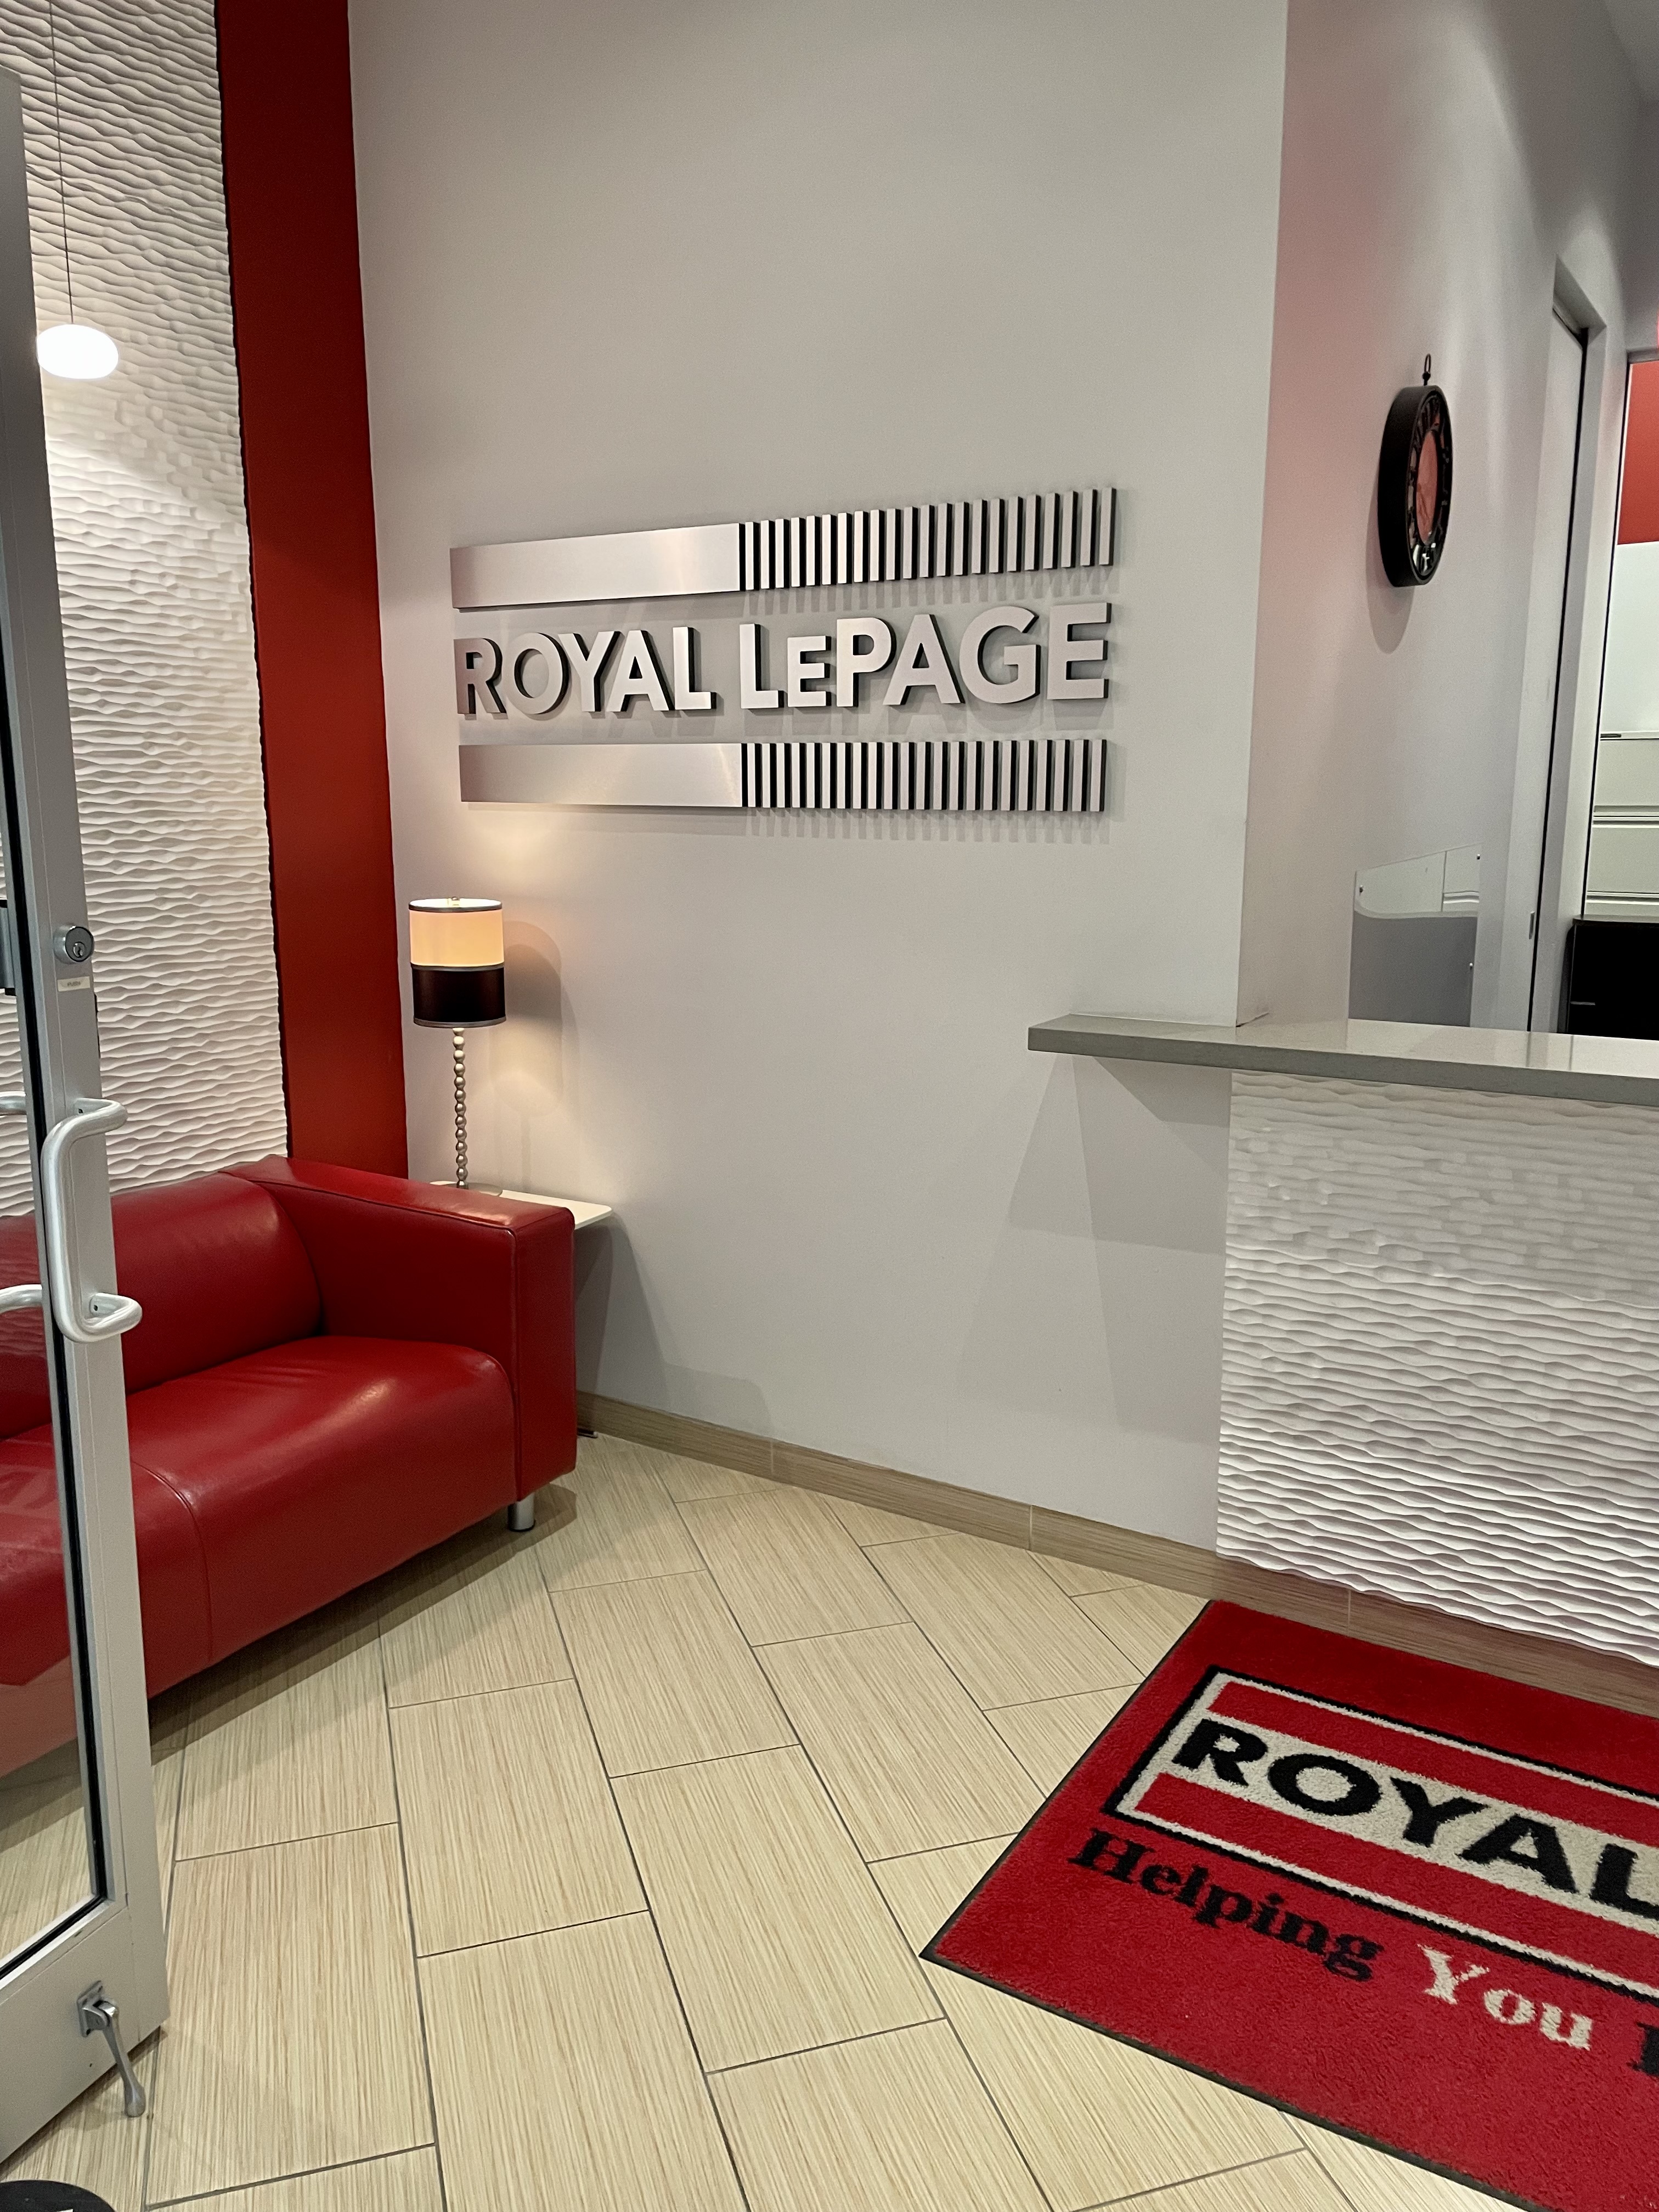 Royal LePage Oakville | Nick Davis